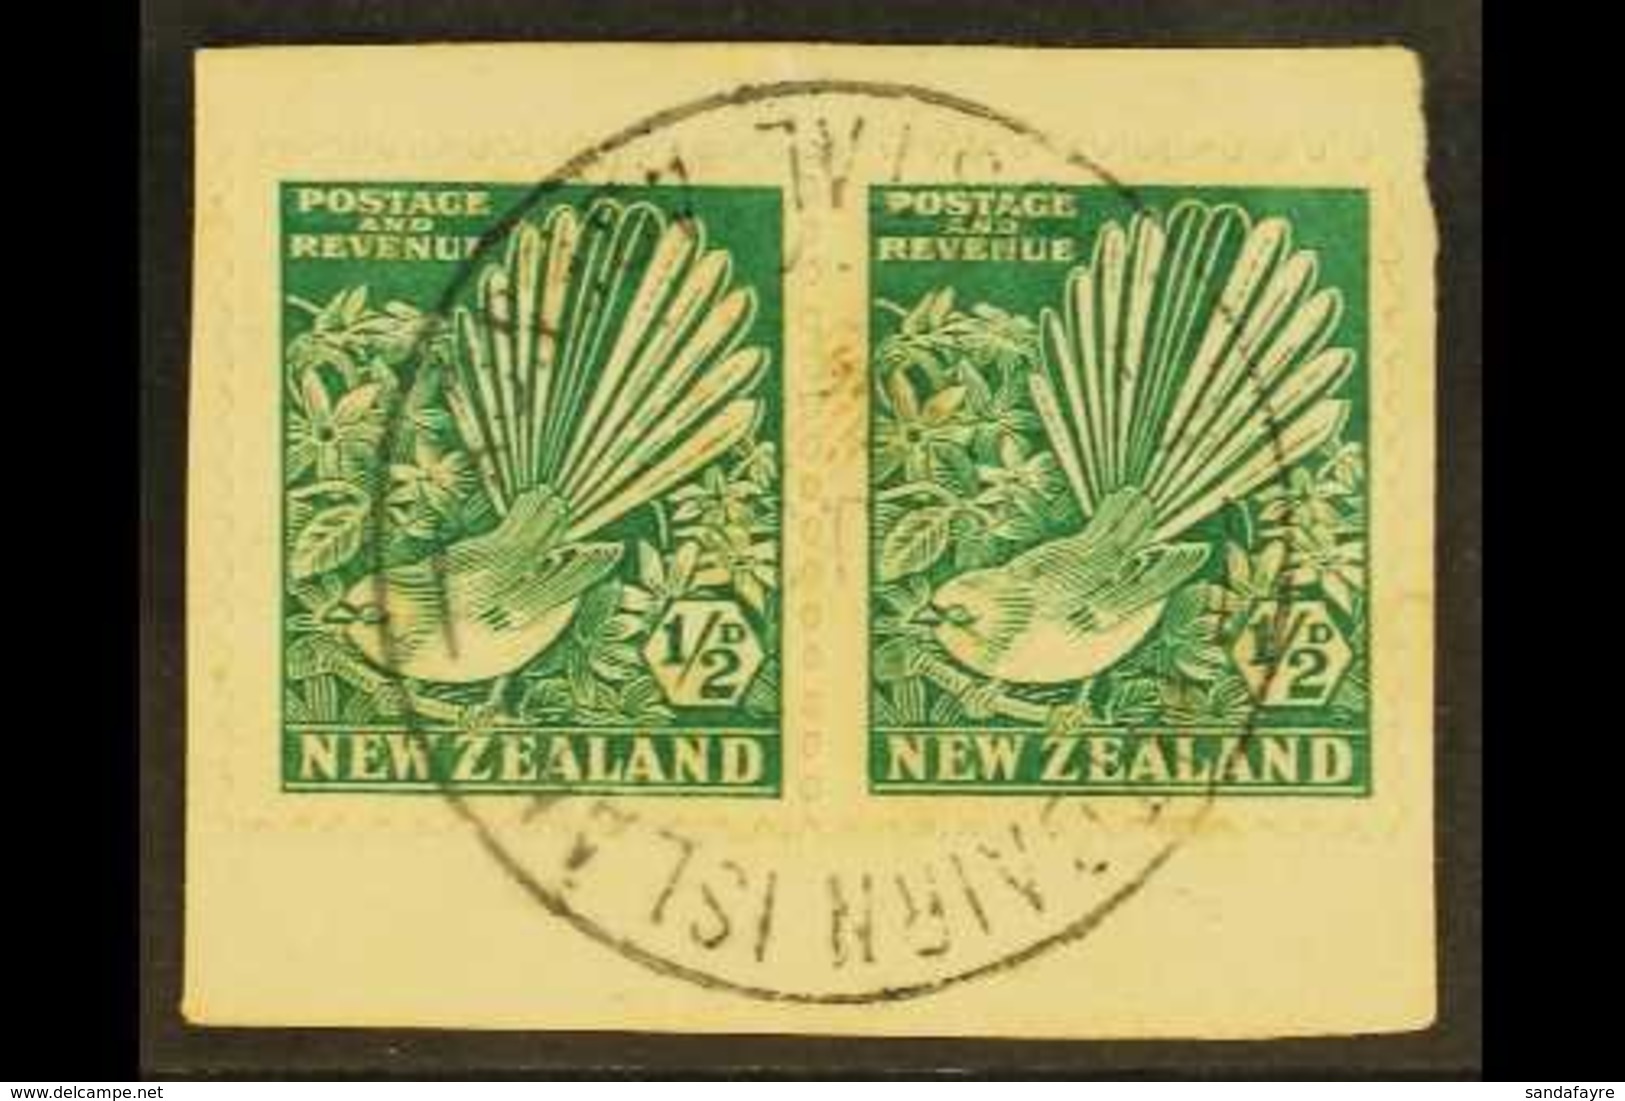 1935 ½d Bright Green Fantail, Horiz Pair Tied To A Piece By Full "PITCAIRN ISLAND" Cancel (date Not Readable), SG Z22.   - Pitcairneilanden